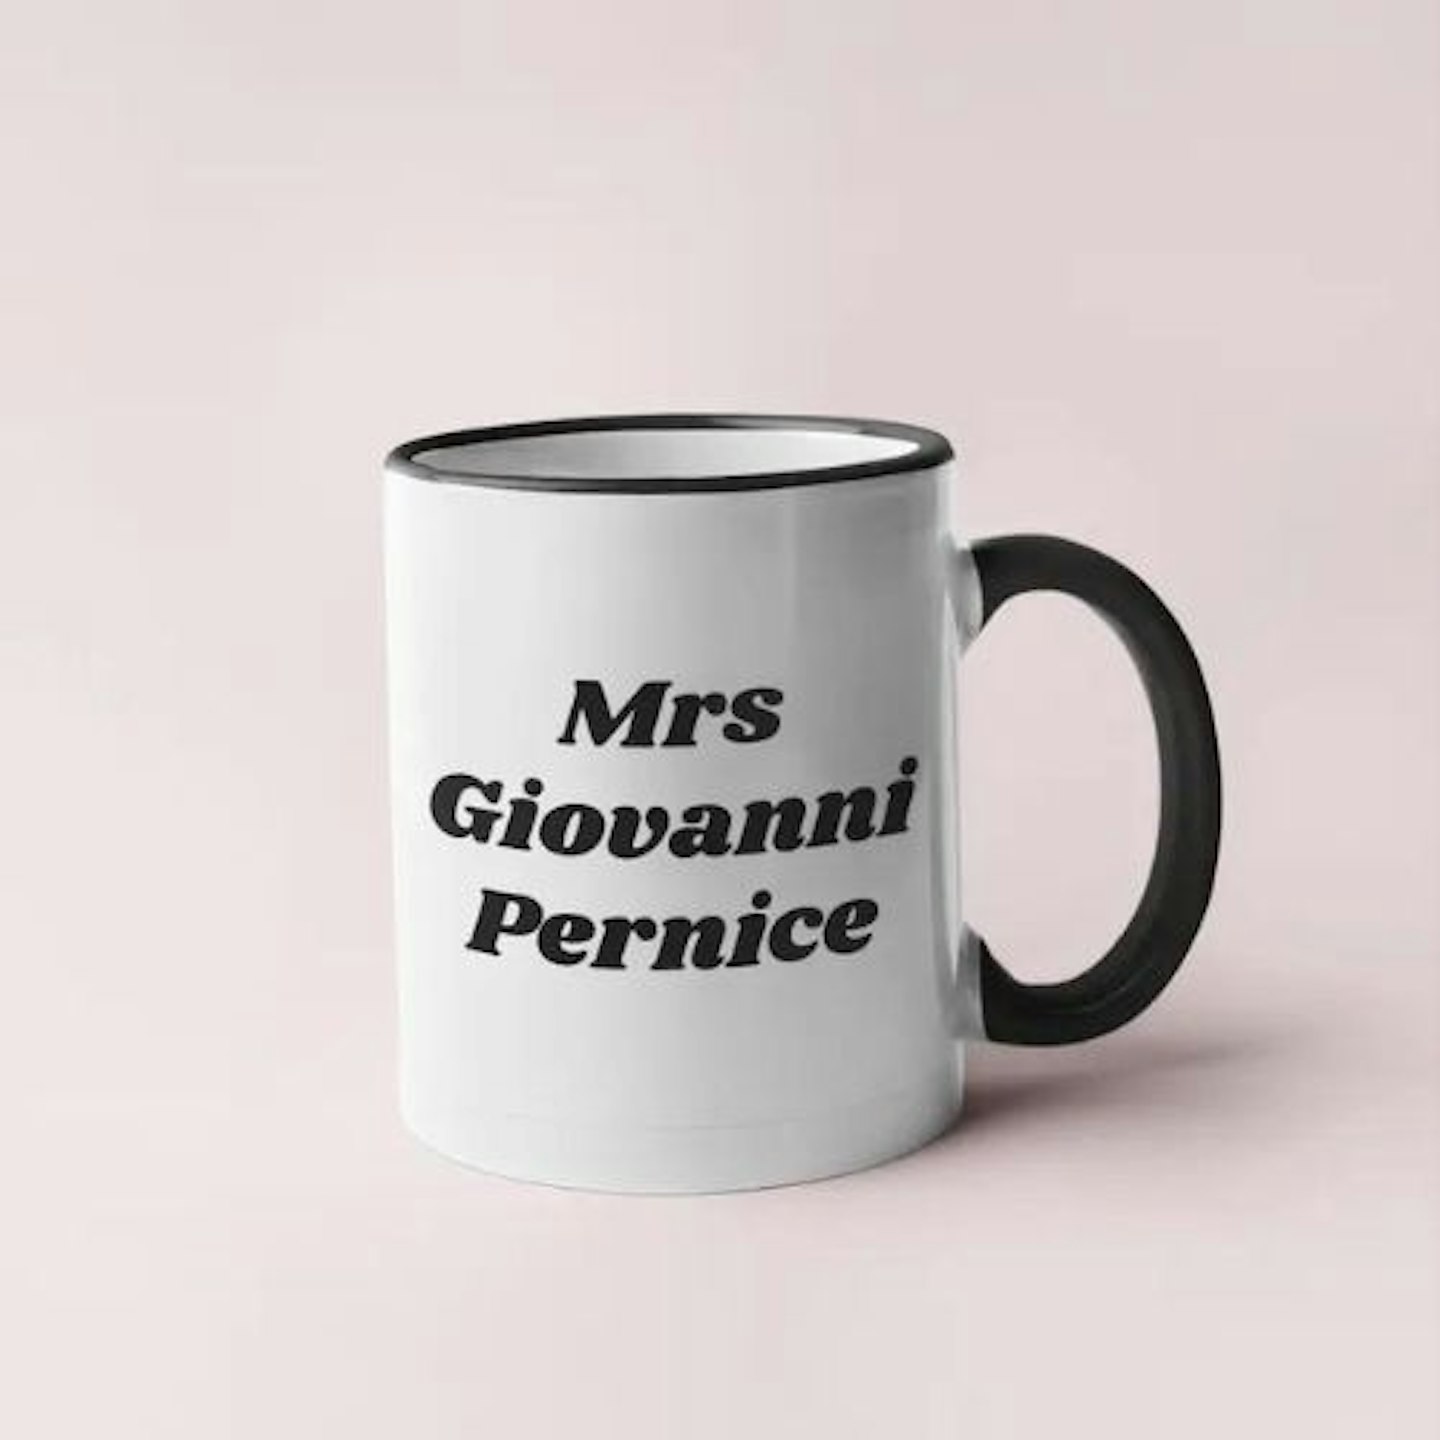 Mrs Giovanni Pernice Celebrity Crush Mug